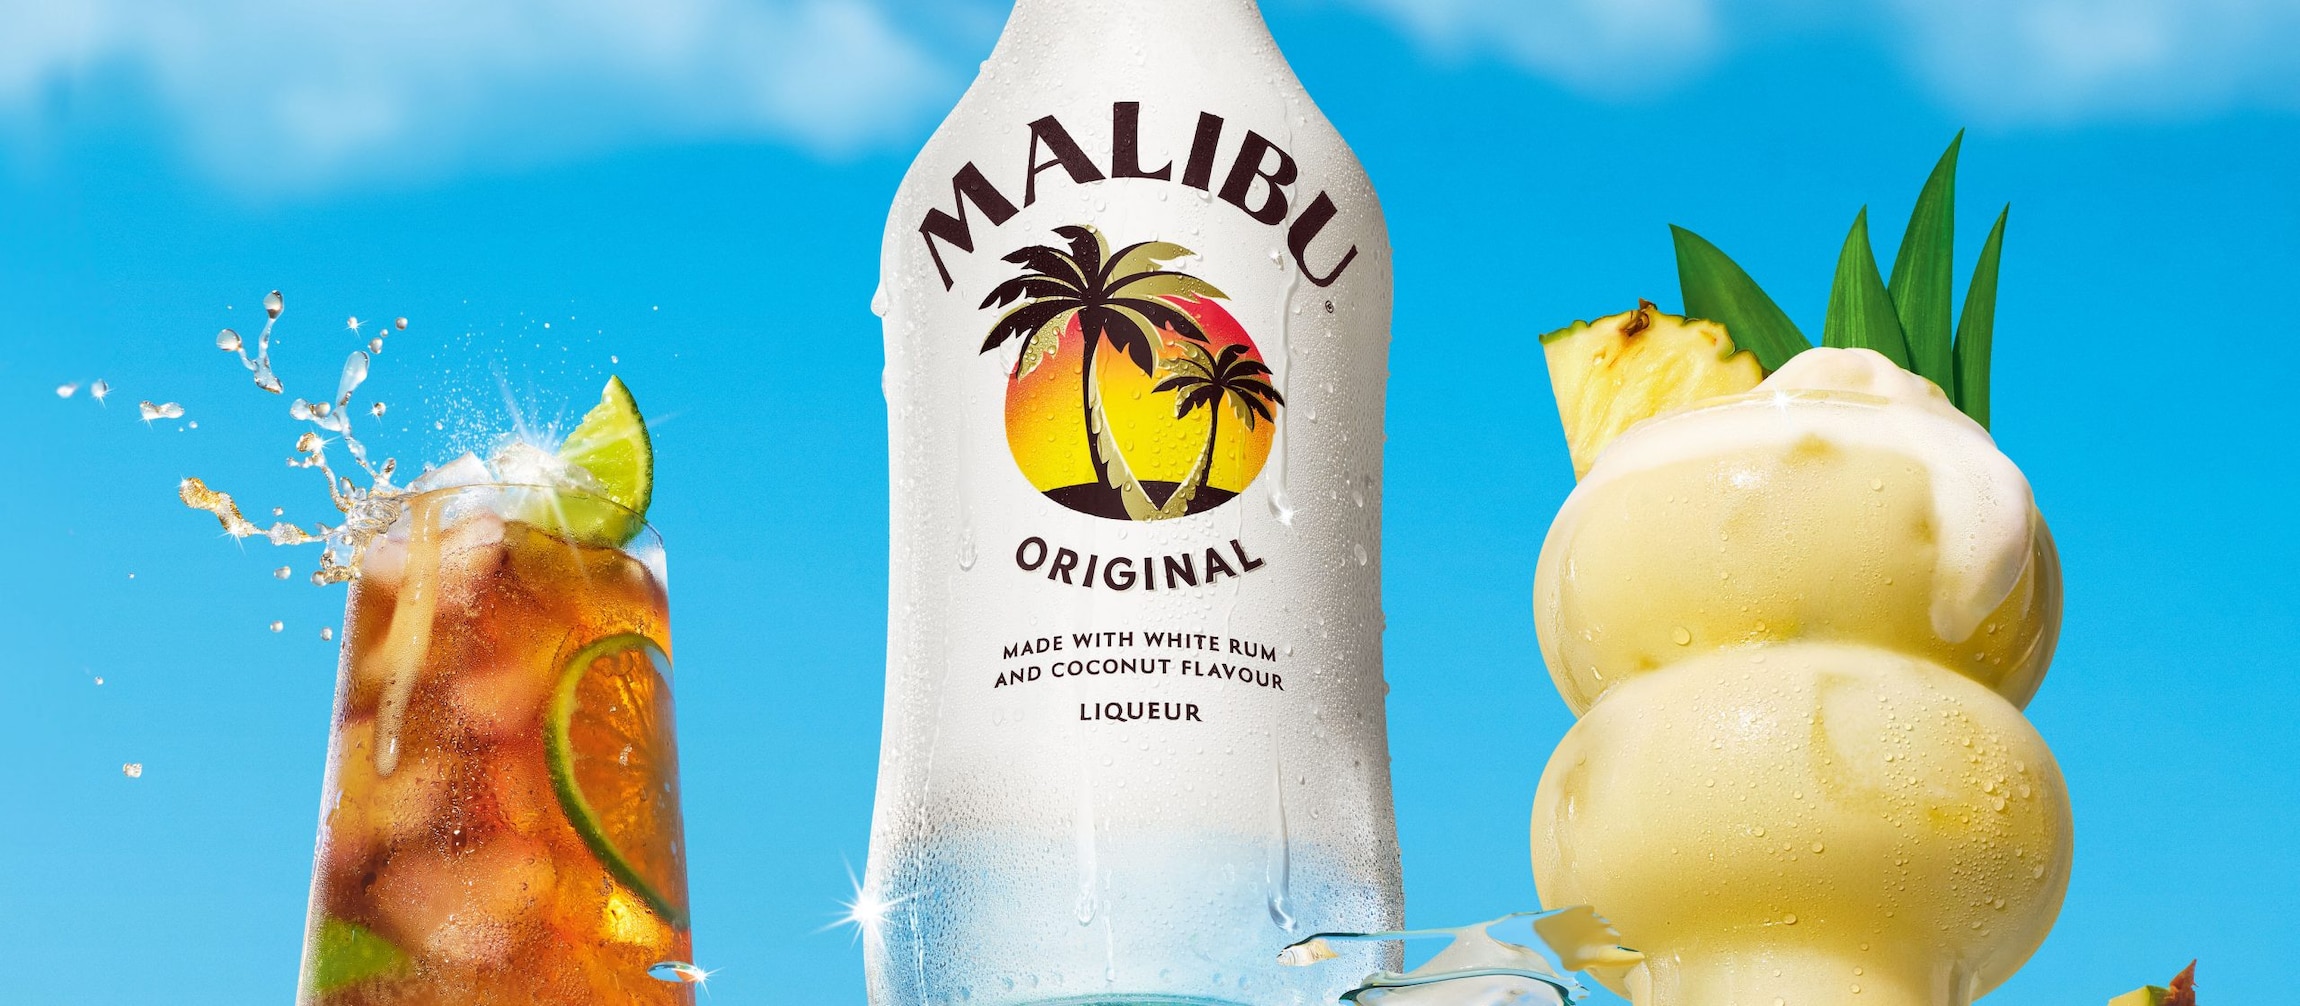 Malibu bottle with two drinks